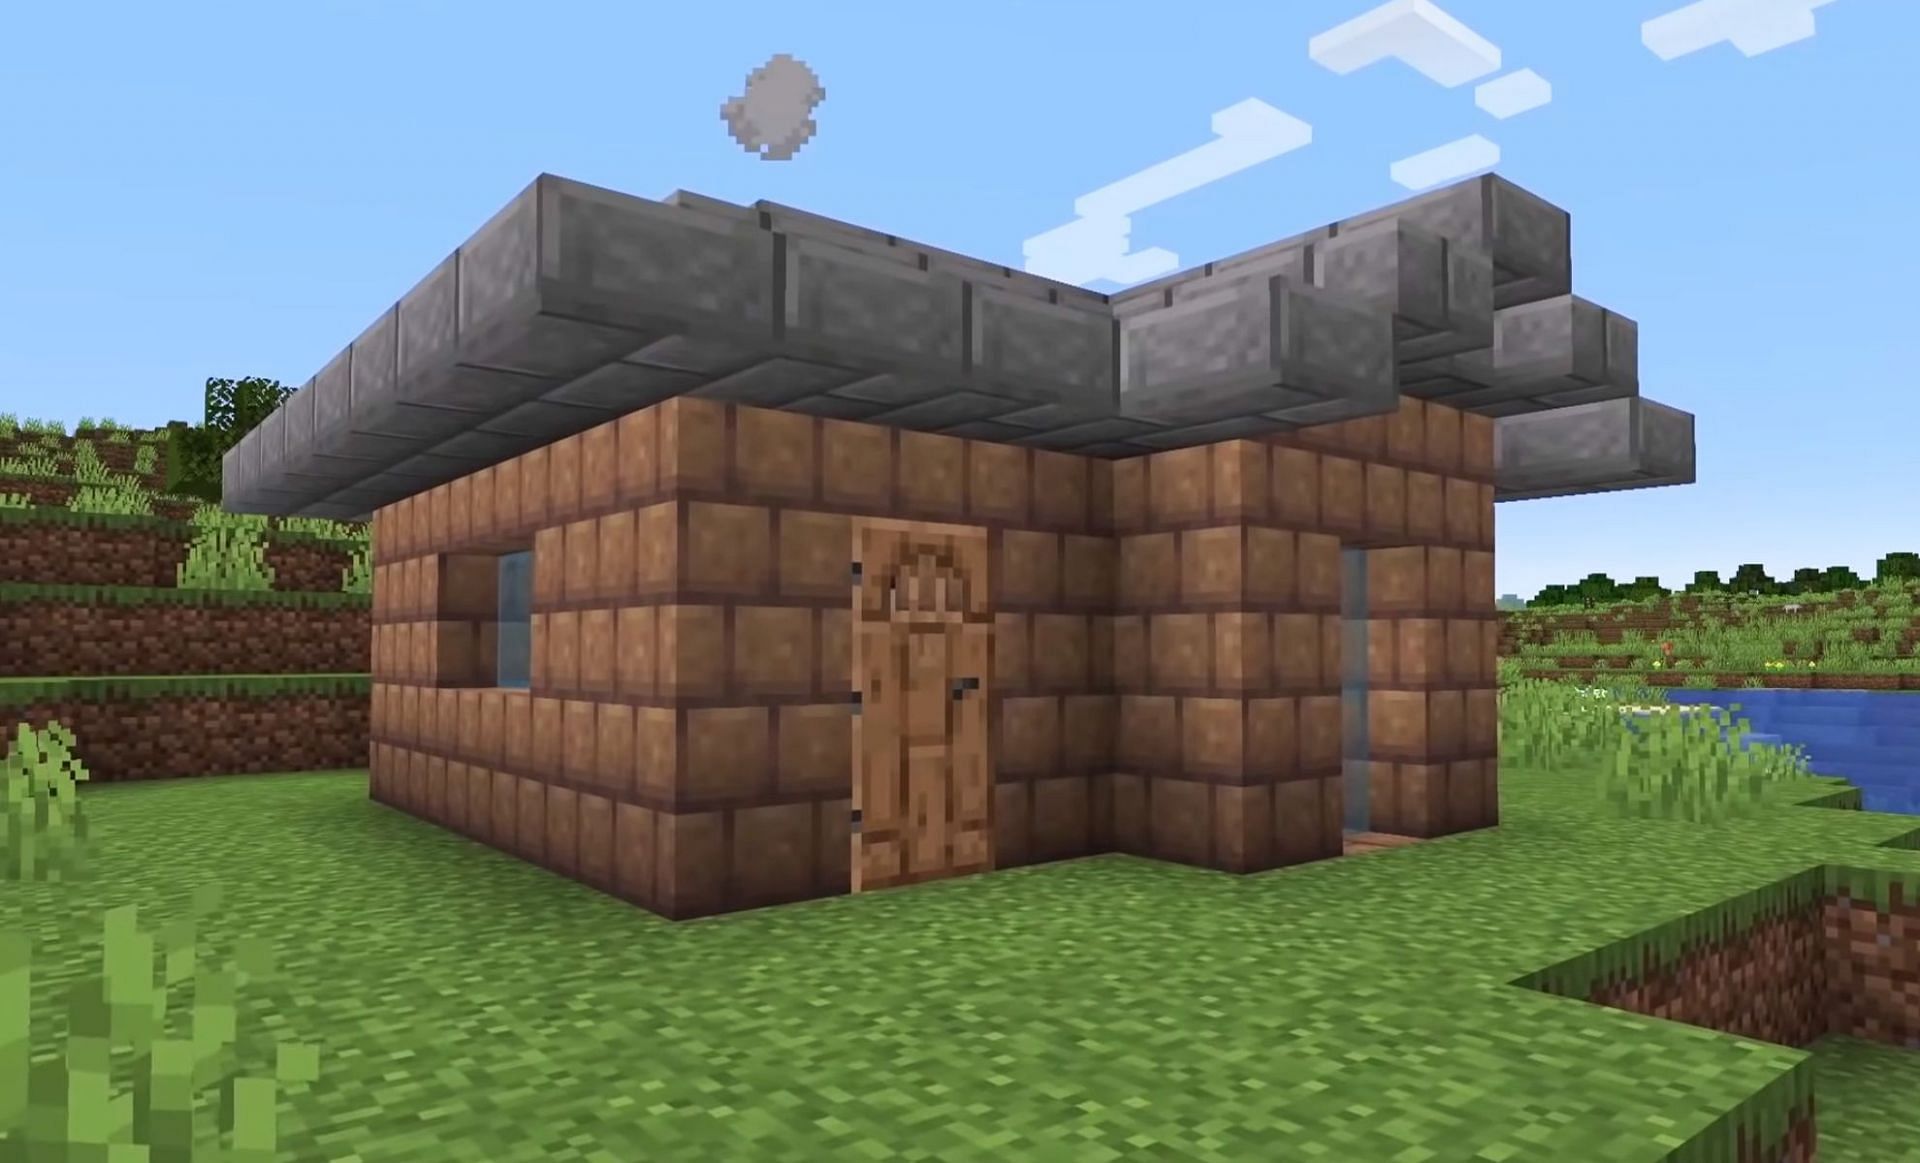 Mud bricks in Minecraft (Image via Mojang)